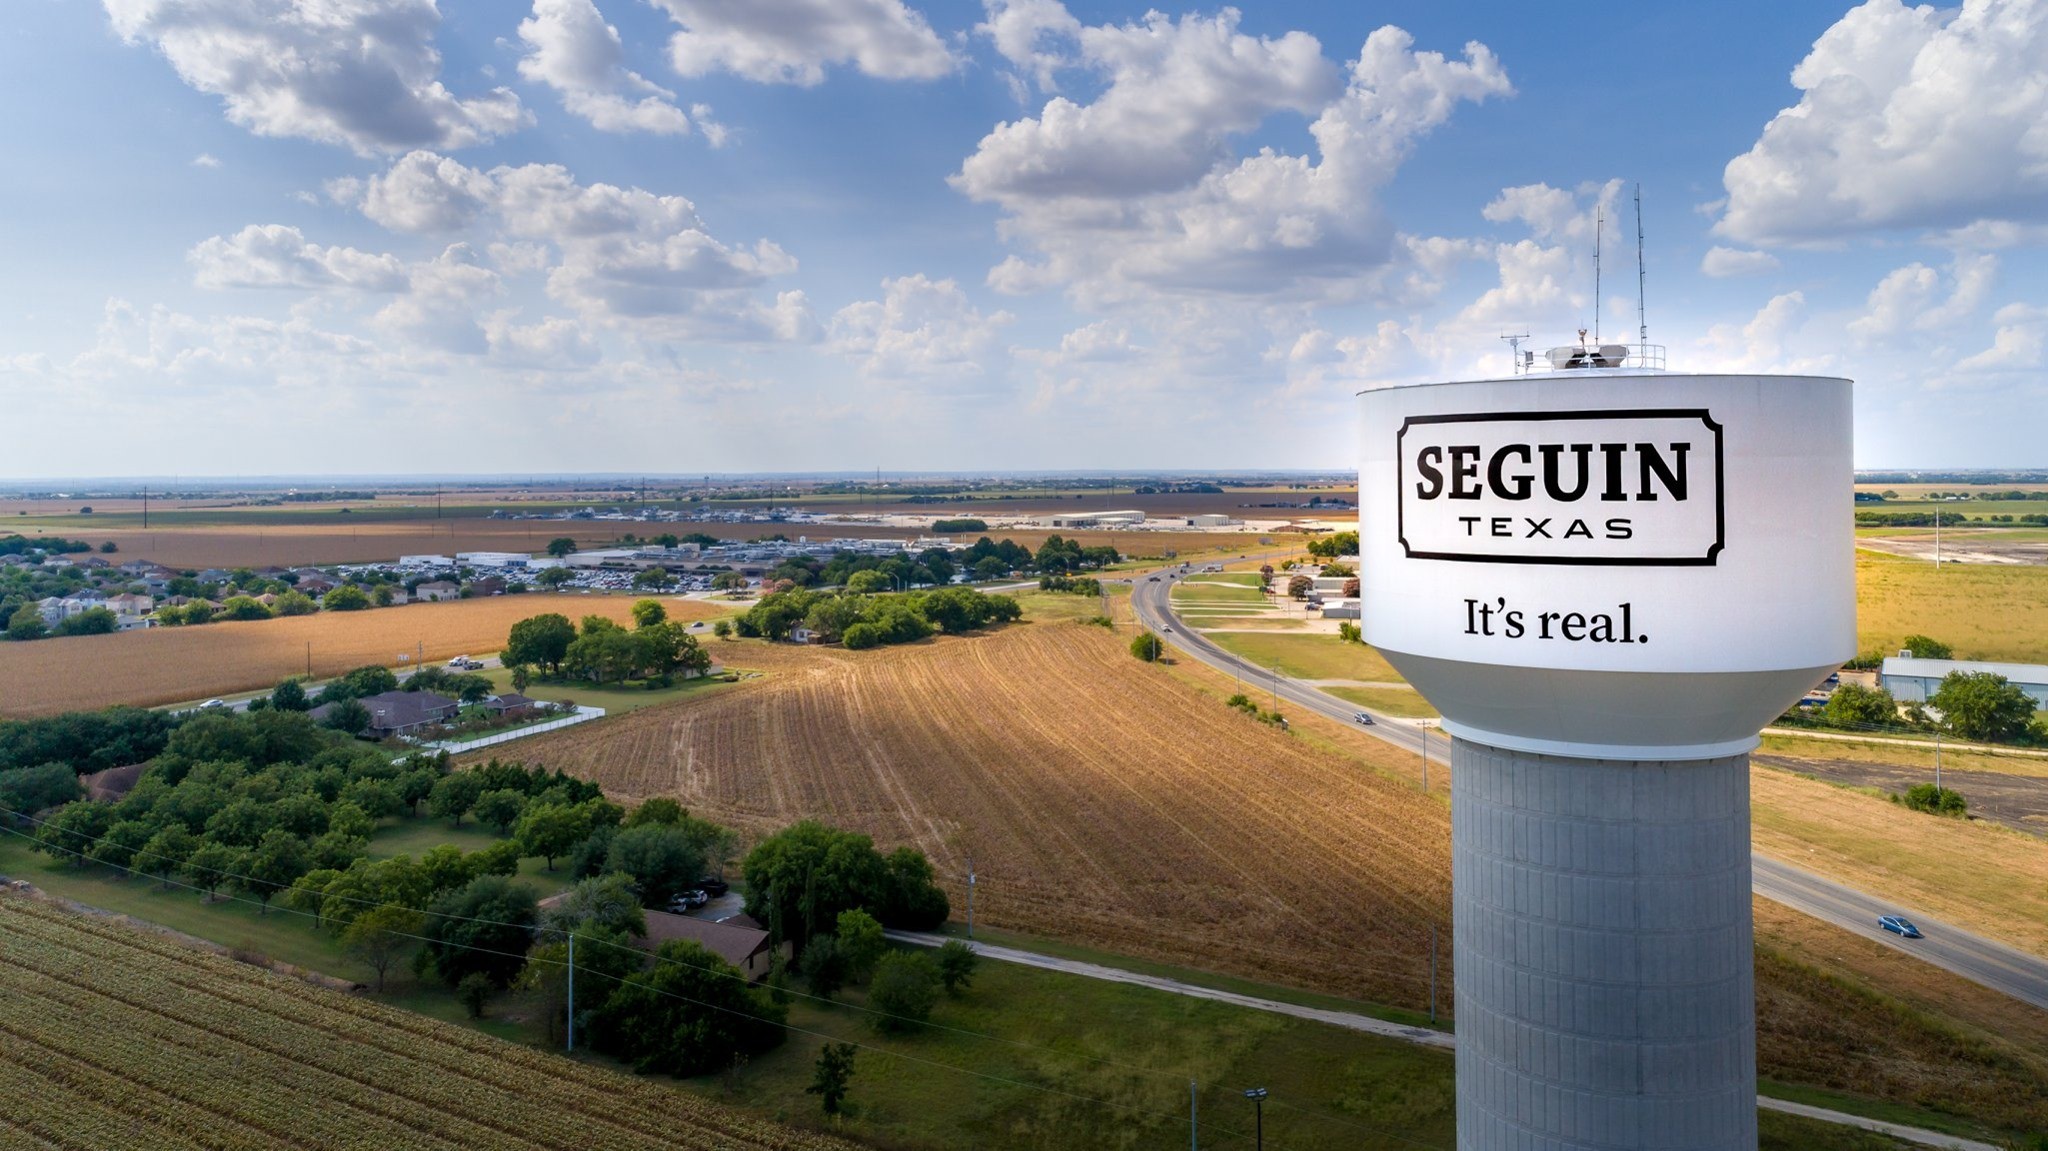 City of Seguin | LinkedIn